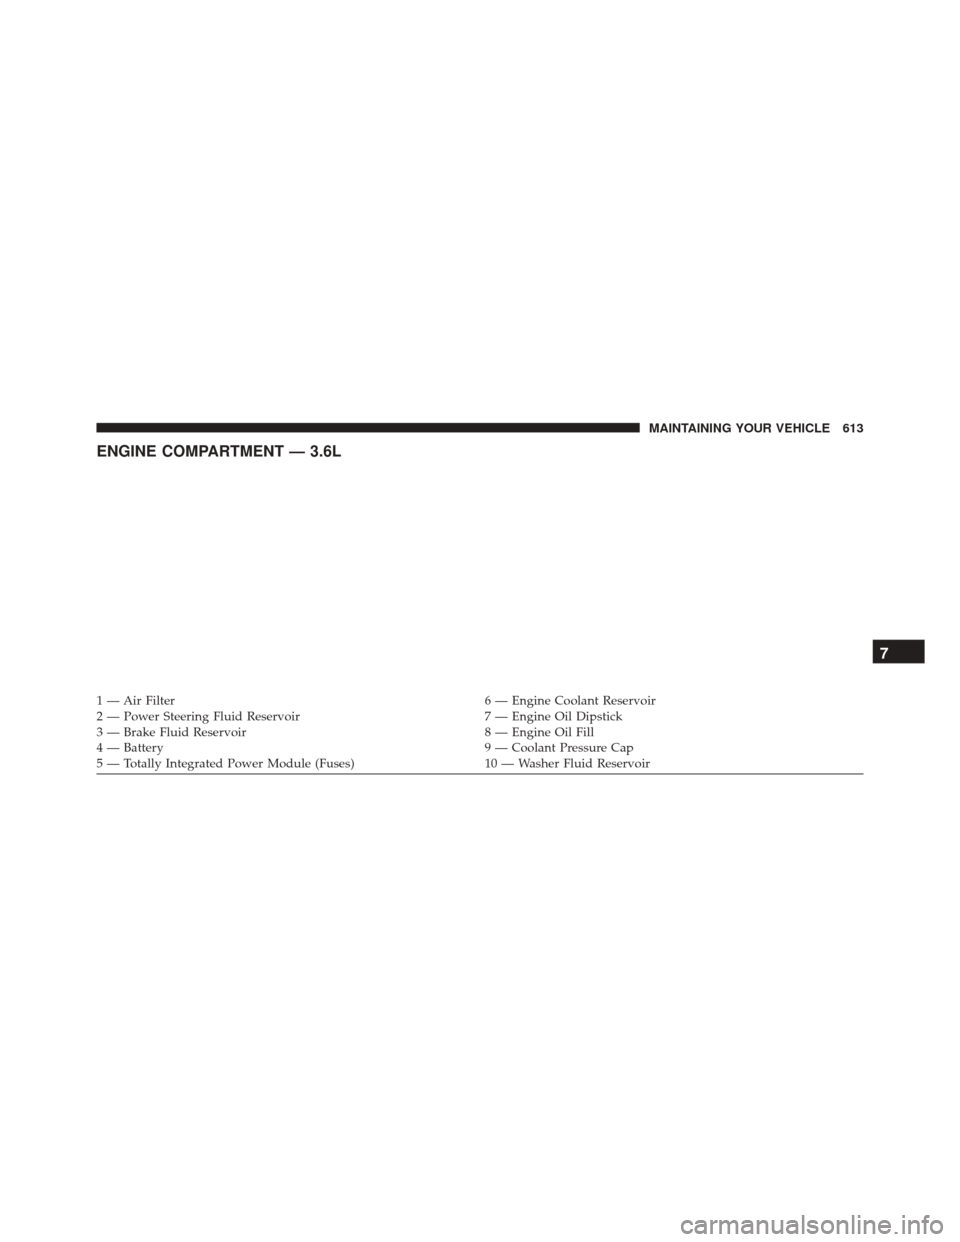 DODGE GRAND CARAVAN 2016 5.G Owners Manual ENGINE COMPARTMENT — 3.6L
1 — Air Filter6 — Engine Coolant Reservoir
2 — Power Steering Fluid Reservoir 7 — Engine Oil Dipstick
3 — Brake Fluid Reservoir 8 — Engine Oil Fill
4 — Batter